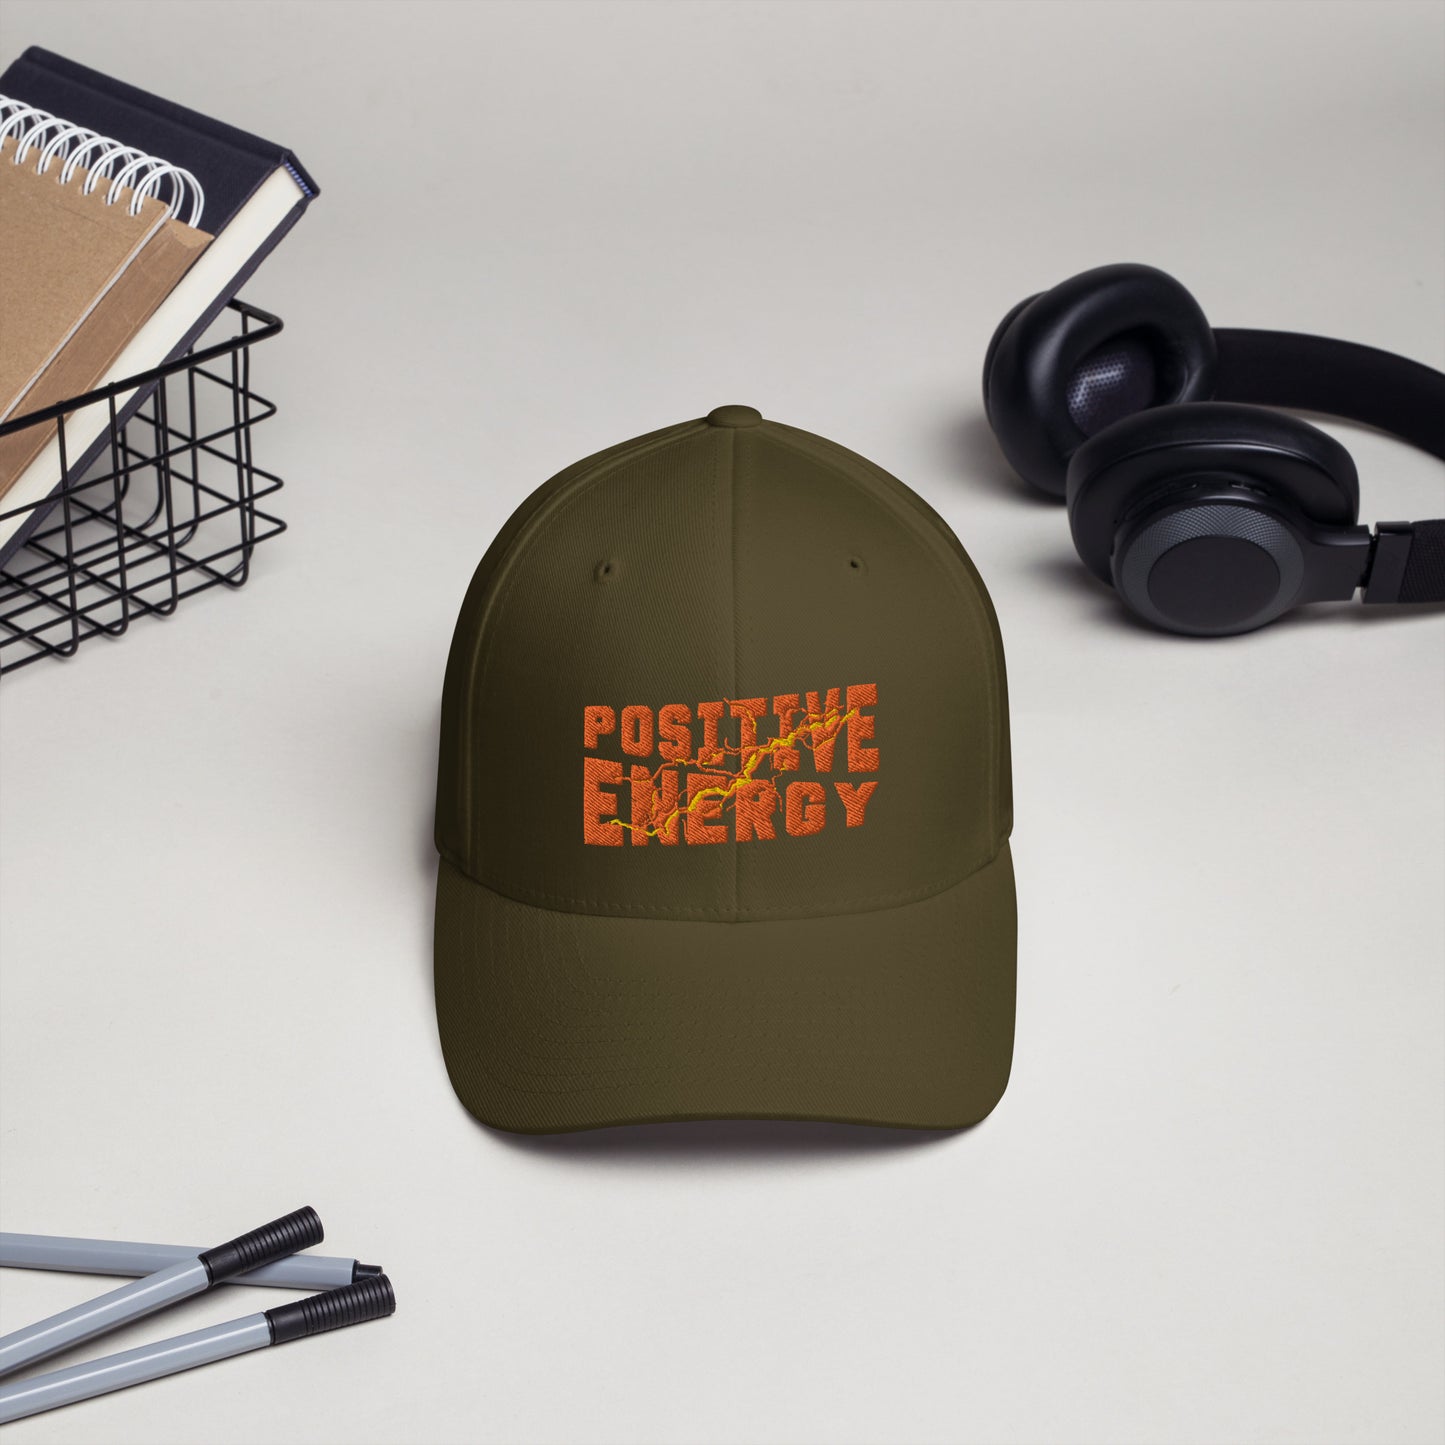 Positive Energy - Baseball Cap - JayMayOnline eStore